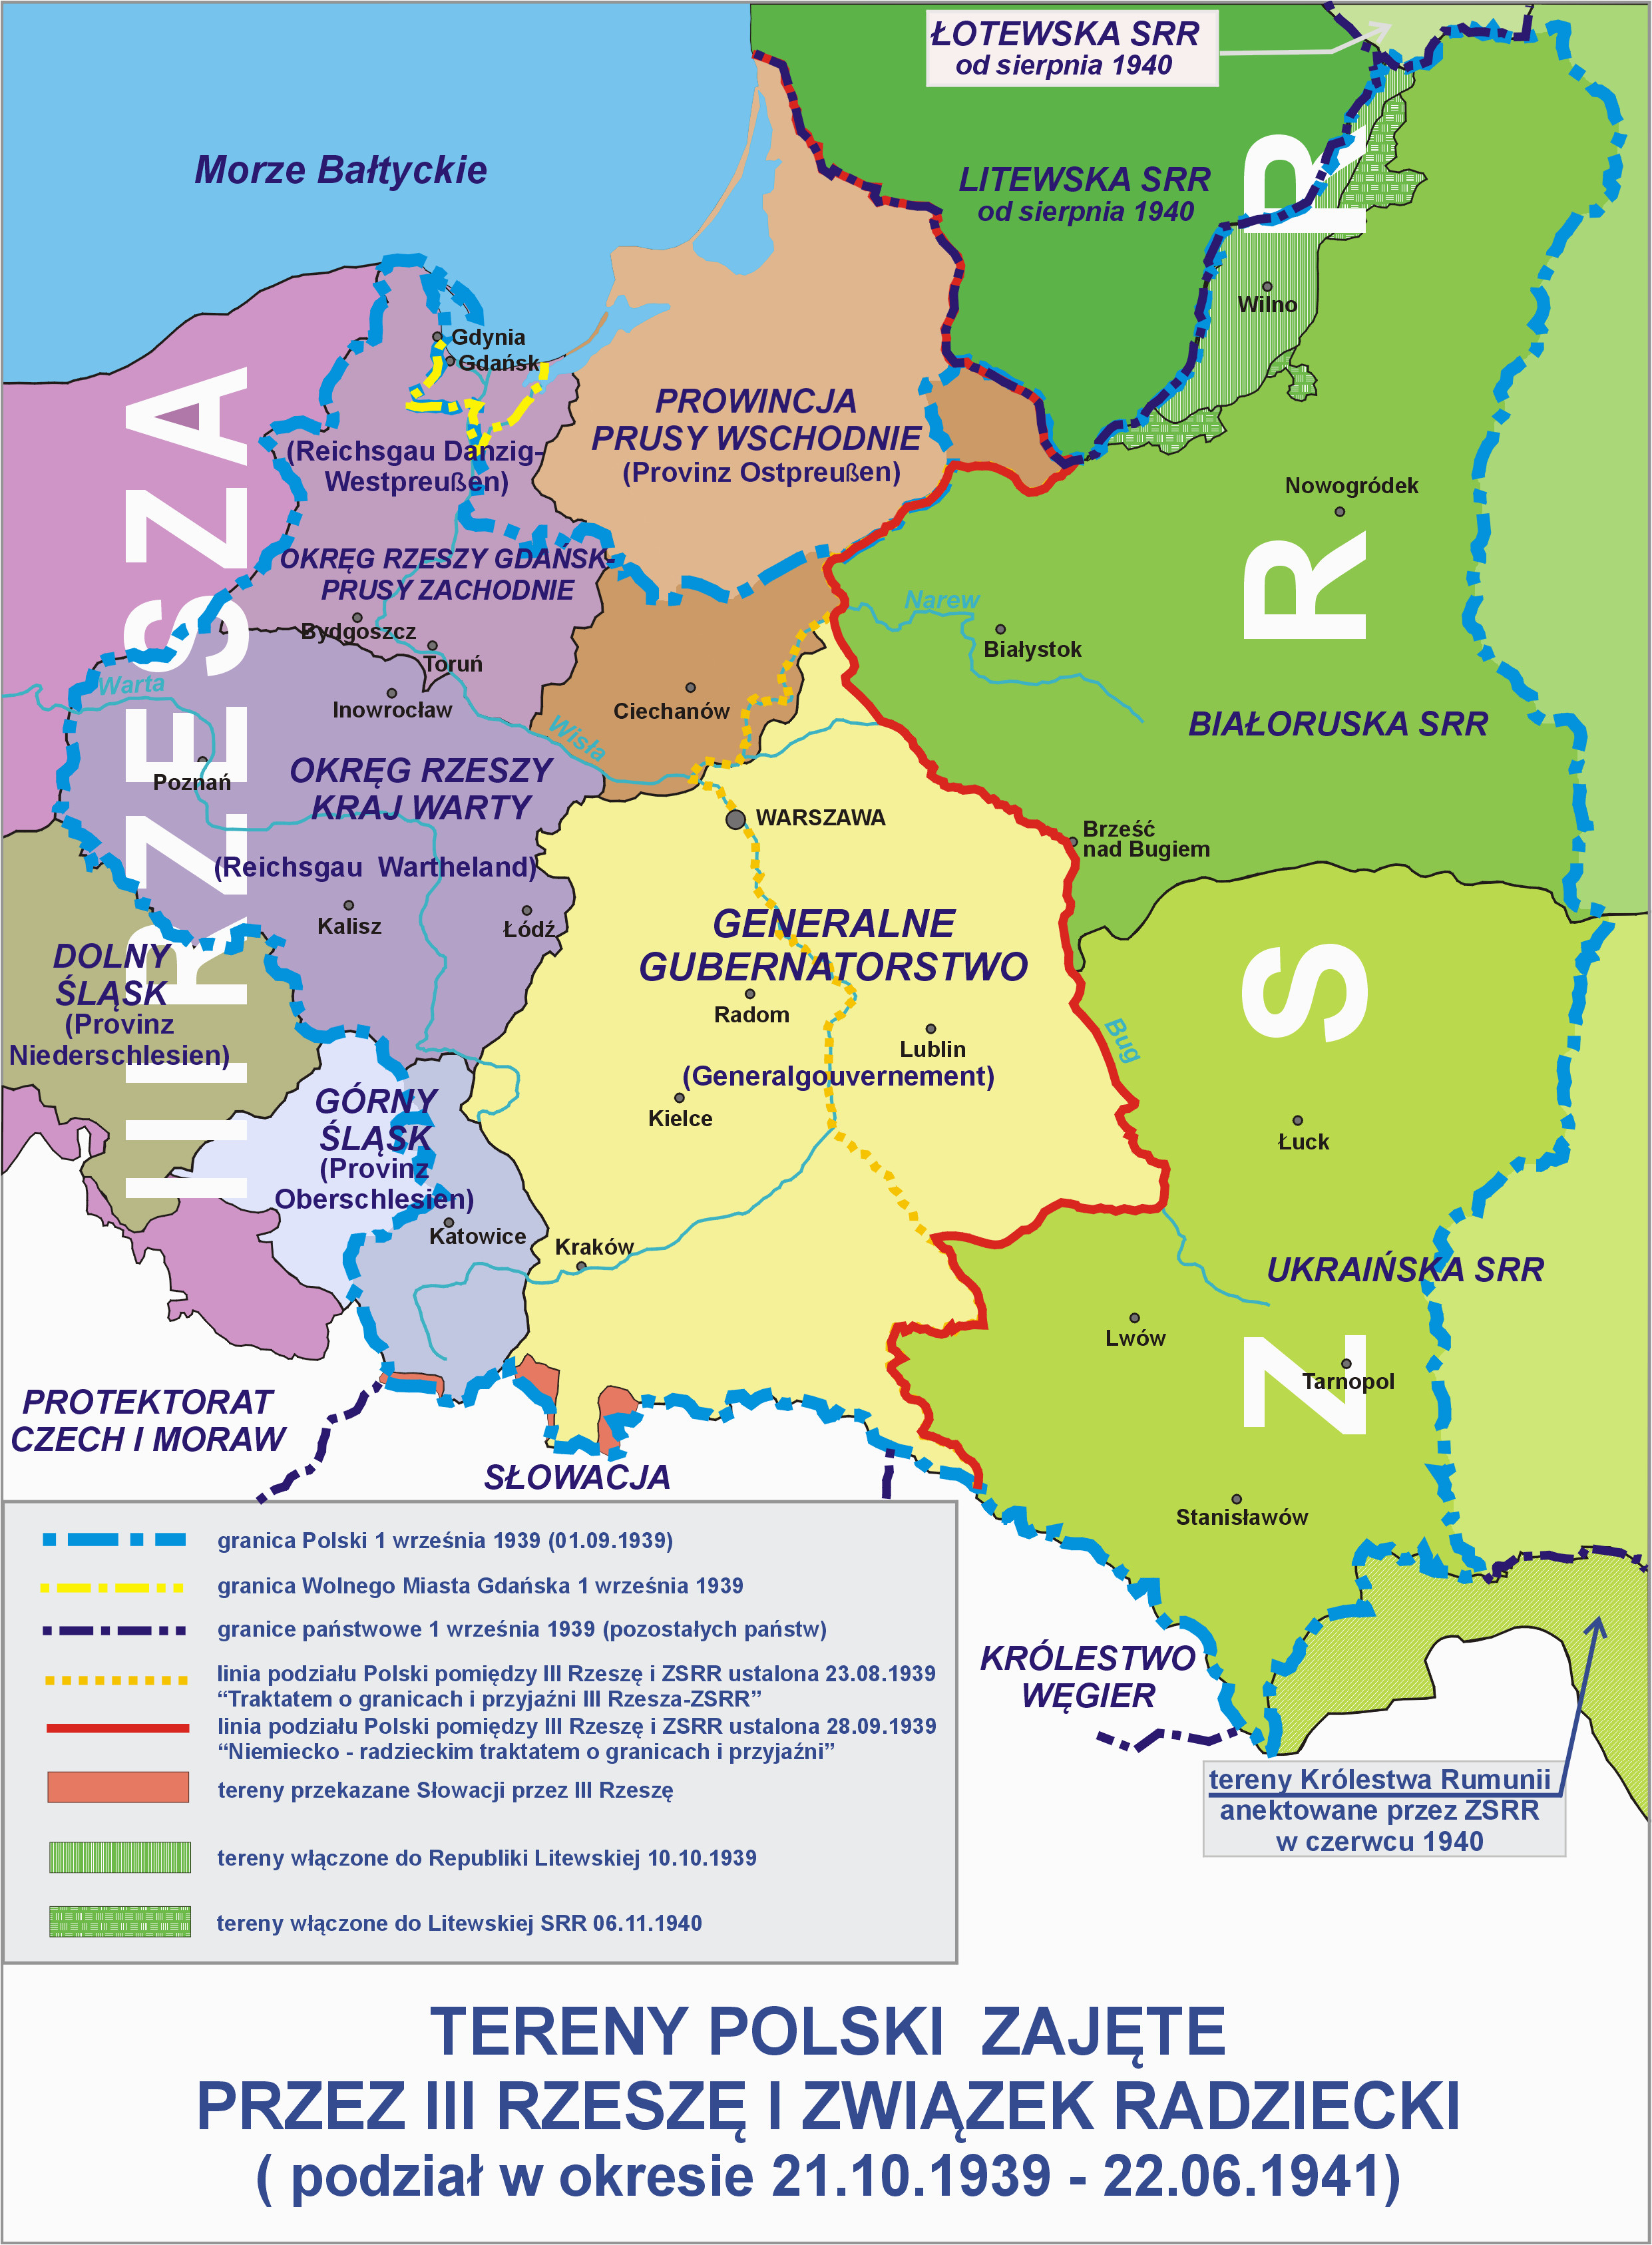 polish areas annexed by nazi germany wikipedia